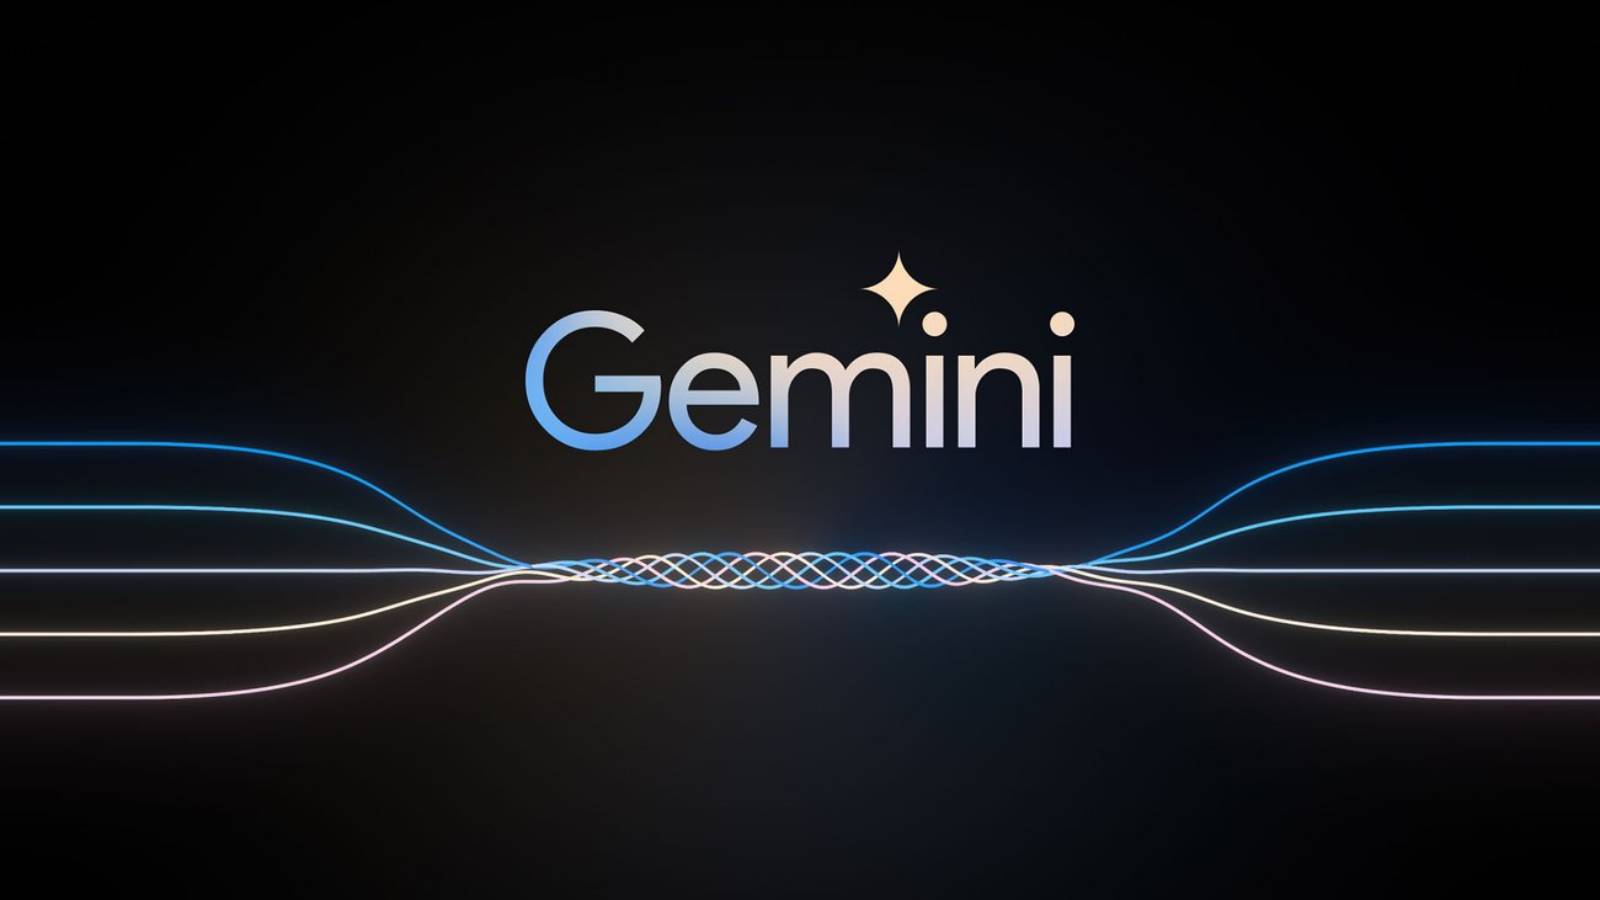 Google GRANDES CAMBIOS Android Gemini Inteligencia artificial